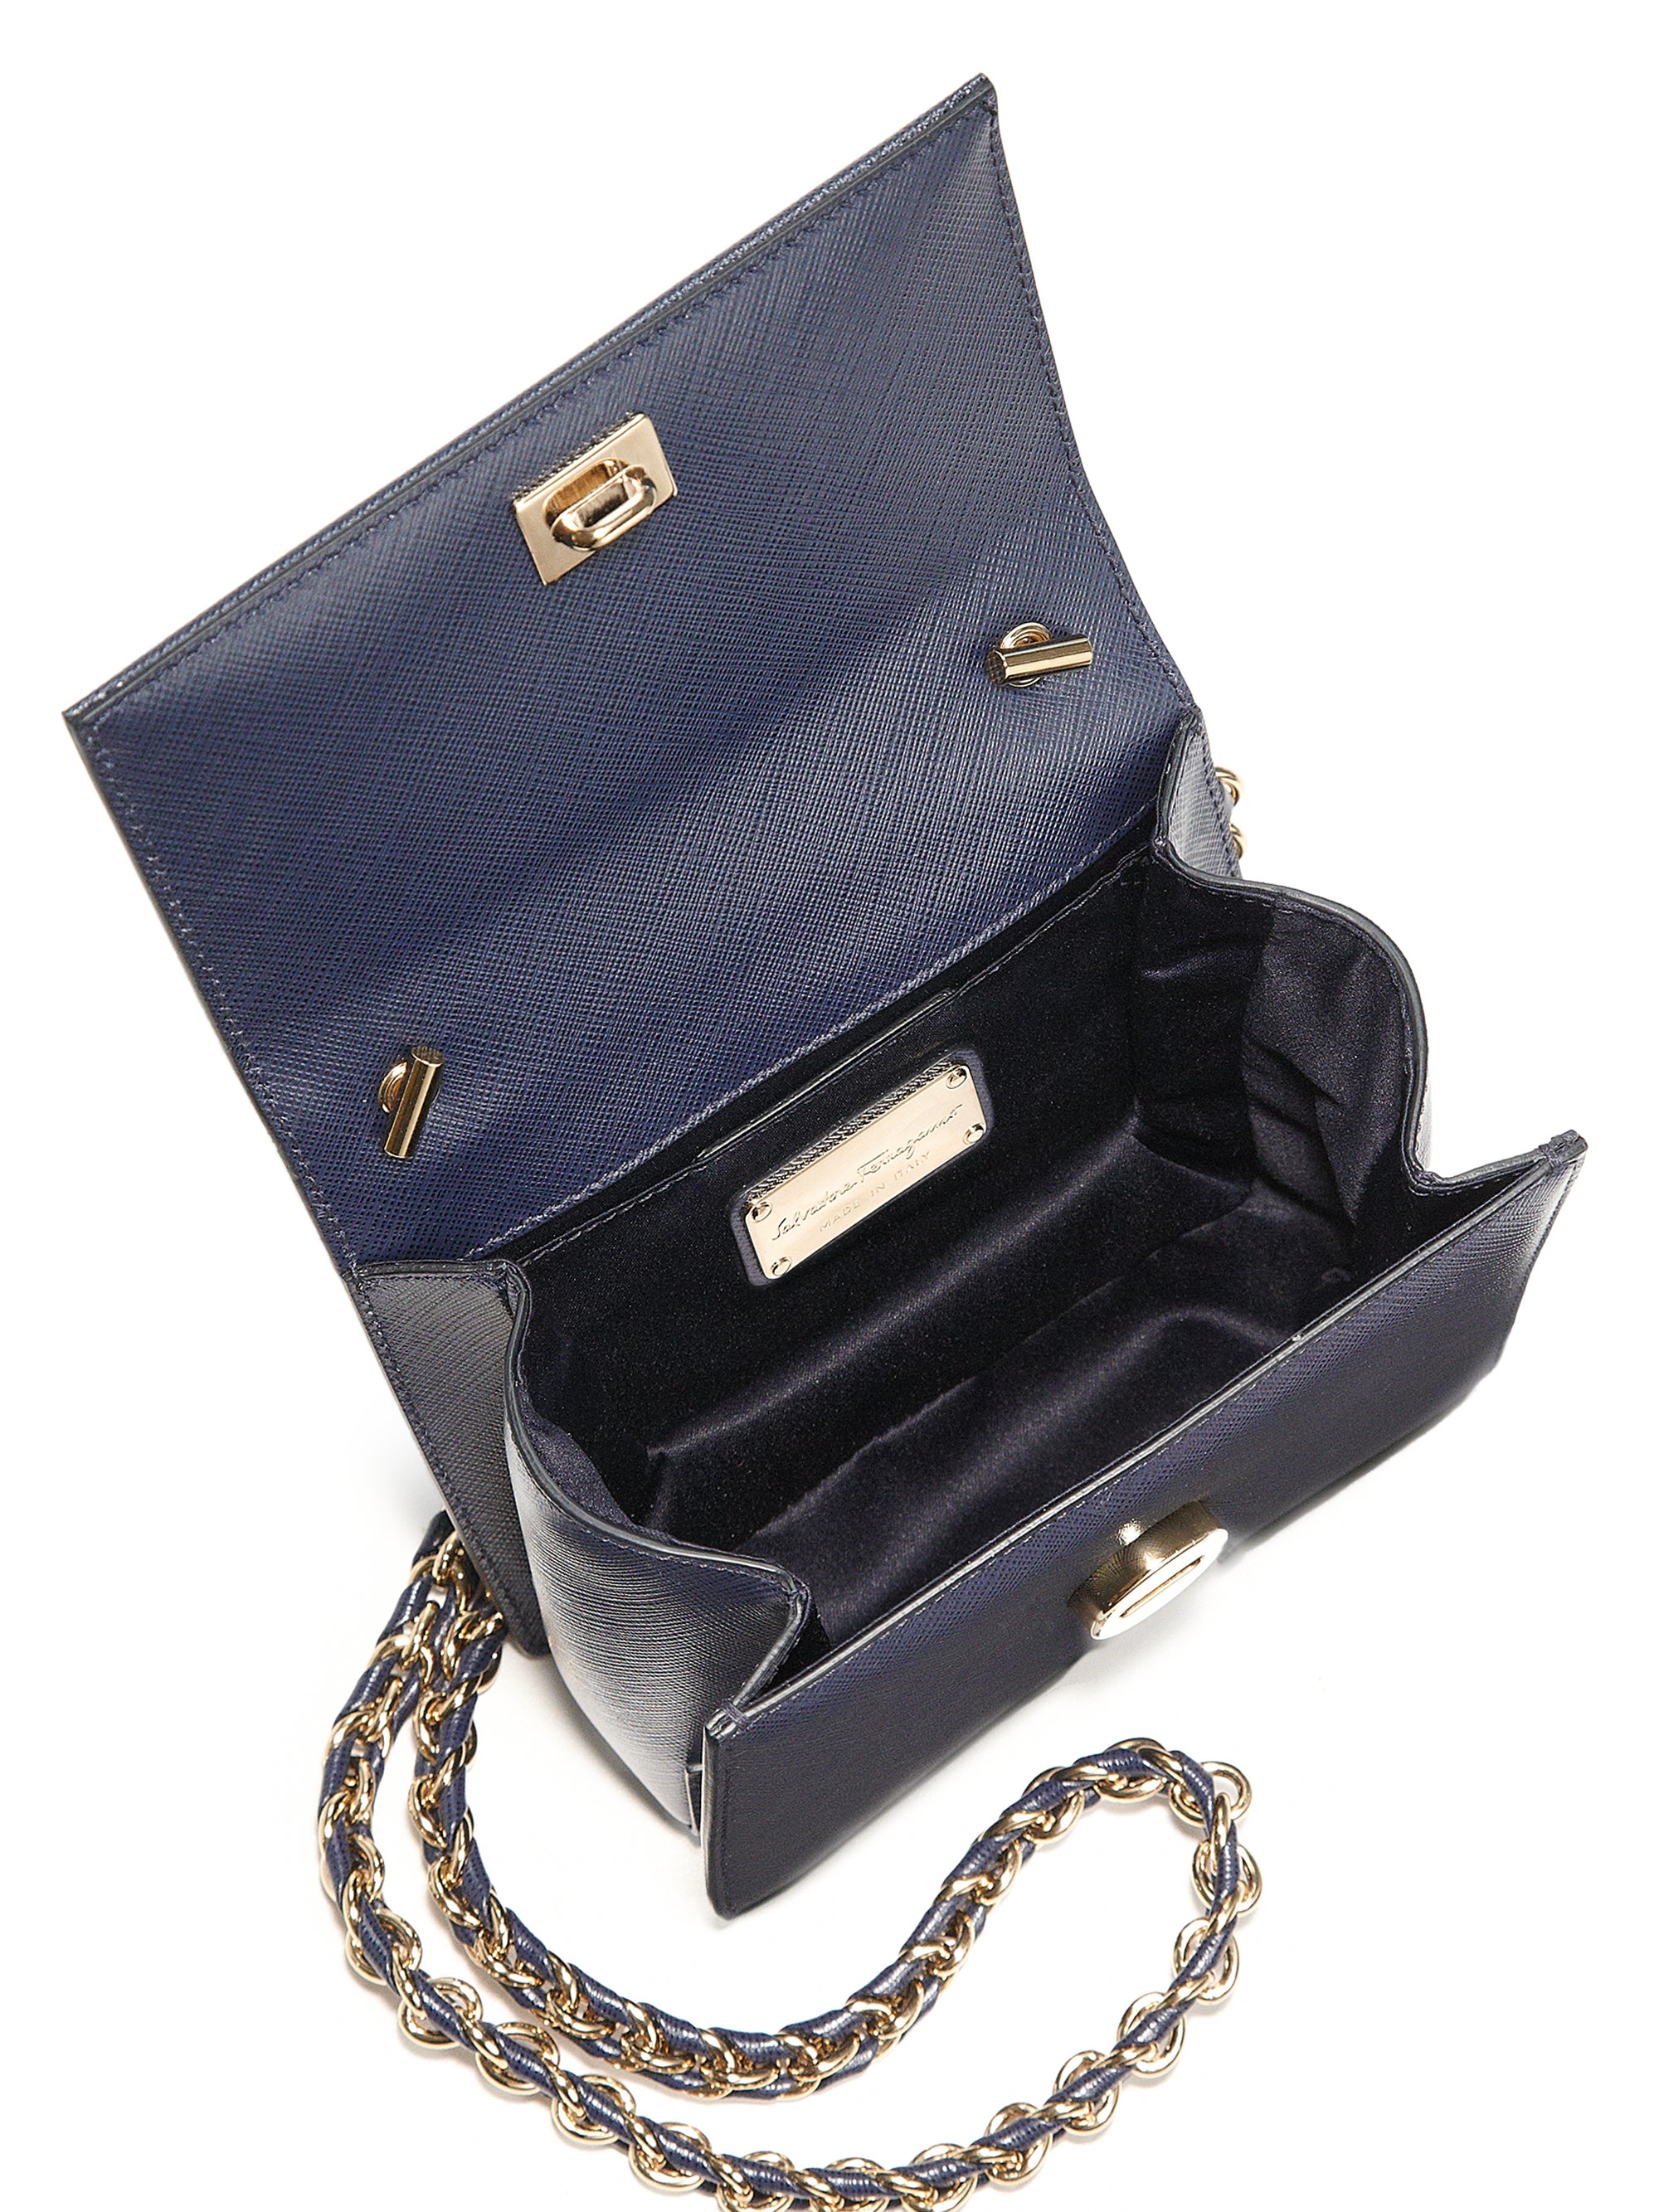 Lyst - Ferragamo Ginny Mini Saffiano Leather Chain Crossbody Bag in Blue